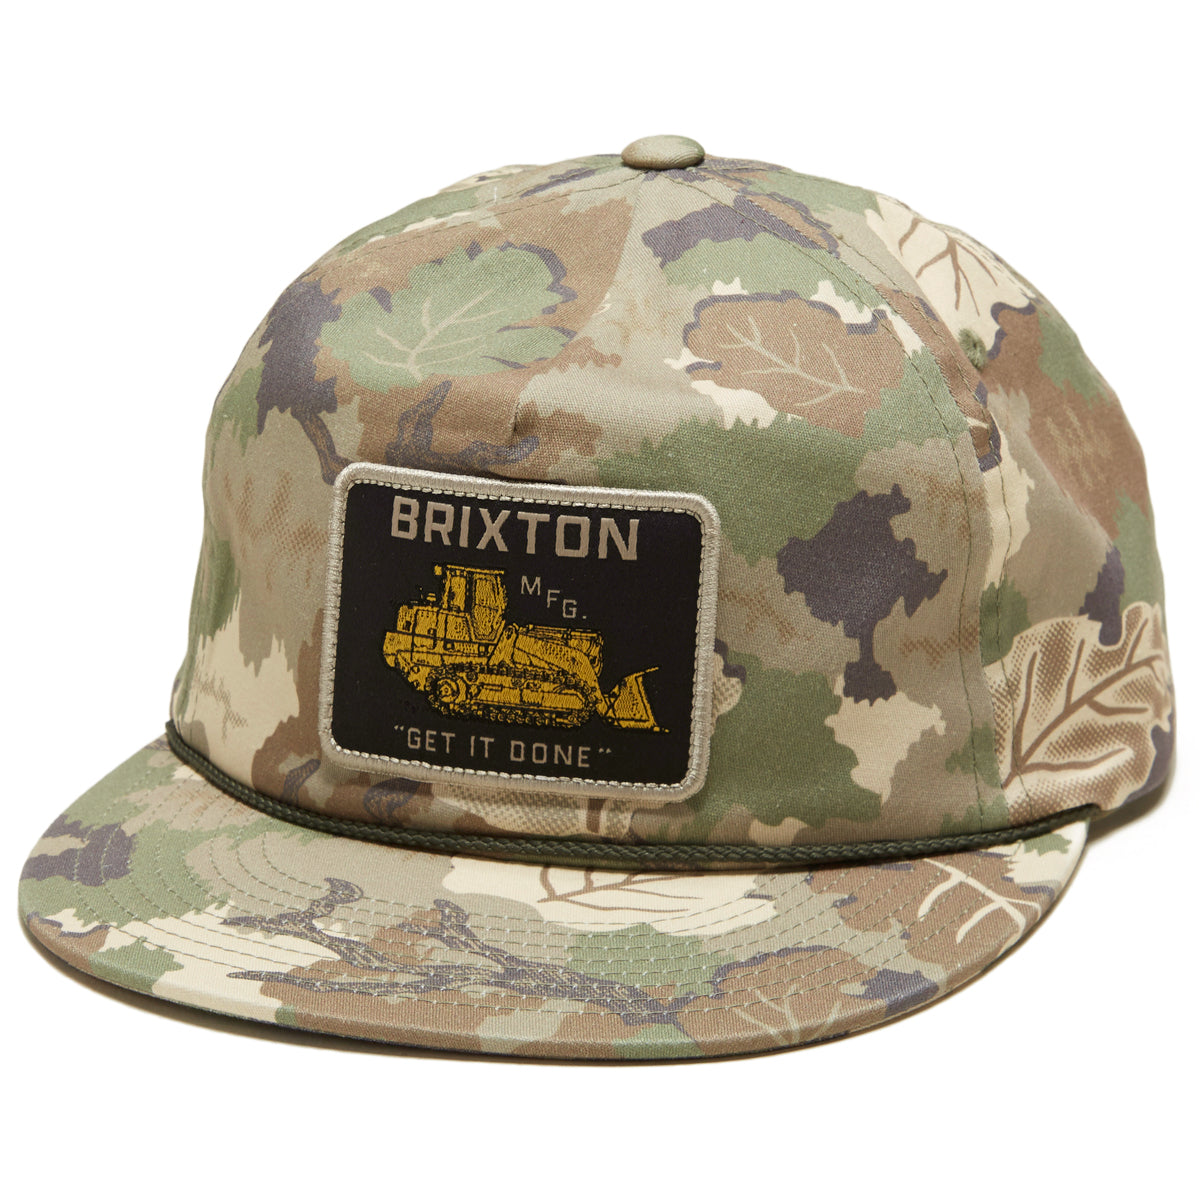 Brixton Irvington Hp Snapback Hat - Leaf Camo image 1